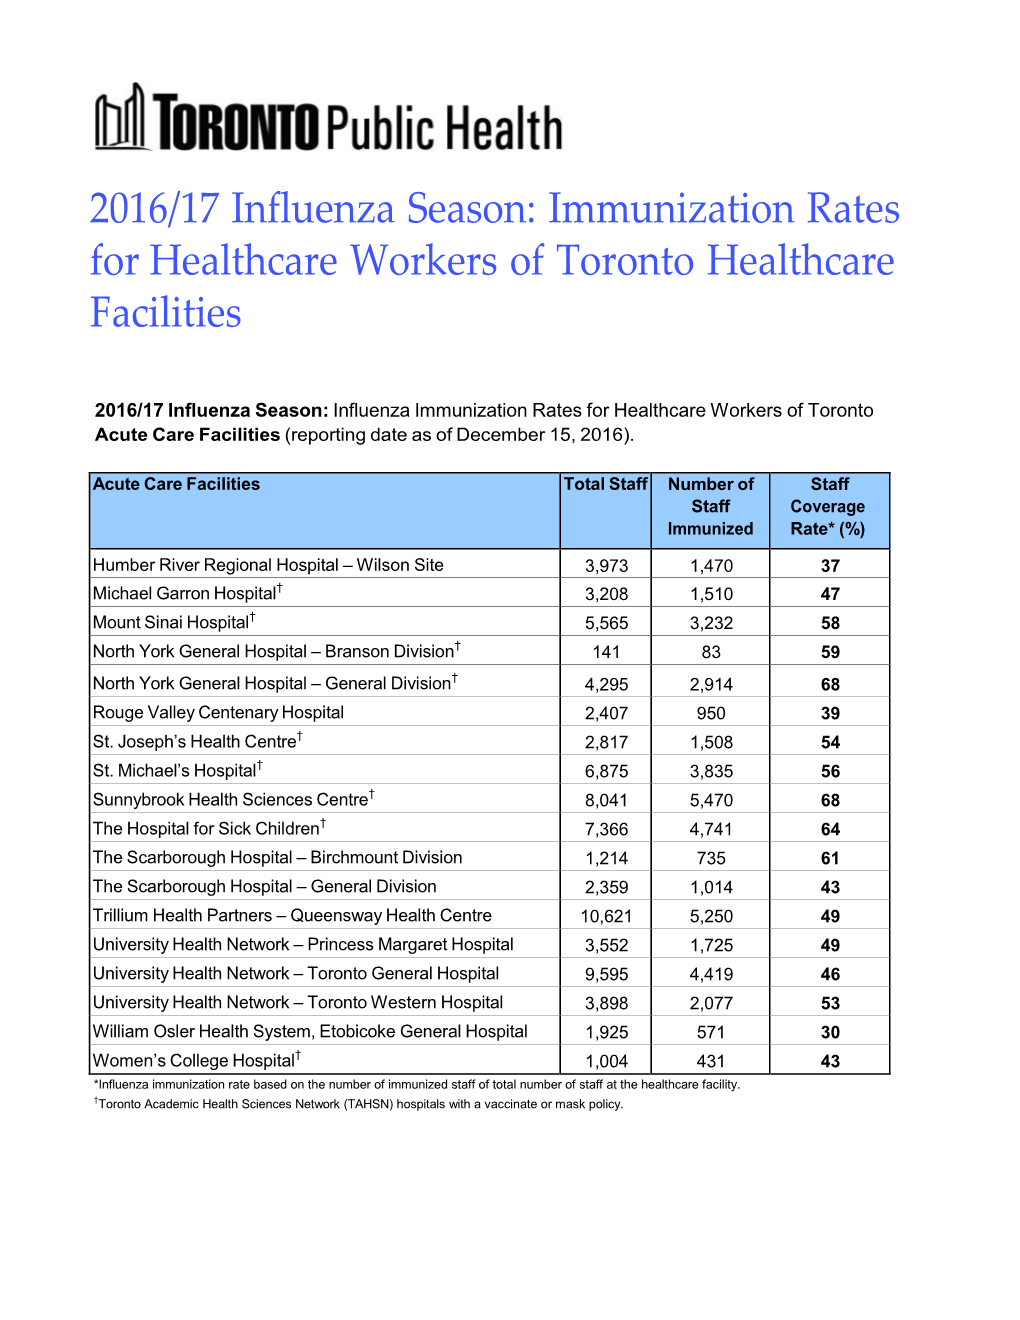 2016/17 Influenza Season: Immunization Rates for Healthcare Workers of Toronto Healthcare Facilities